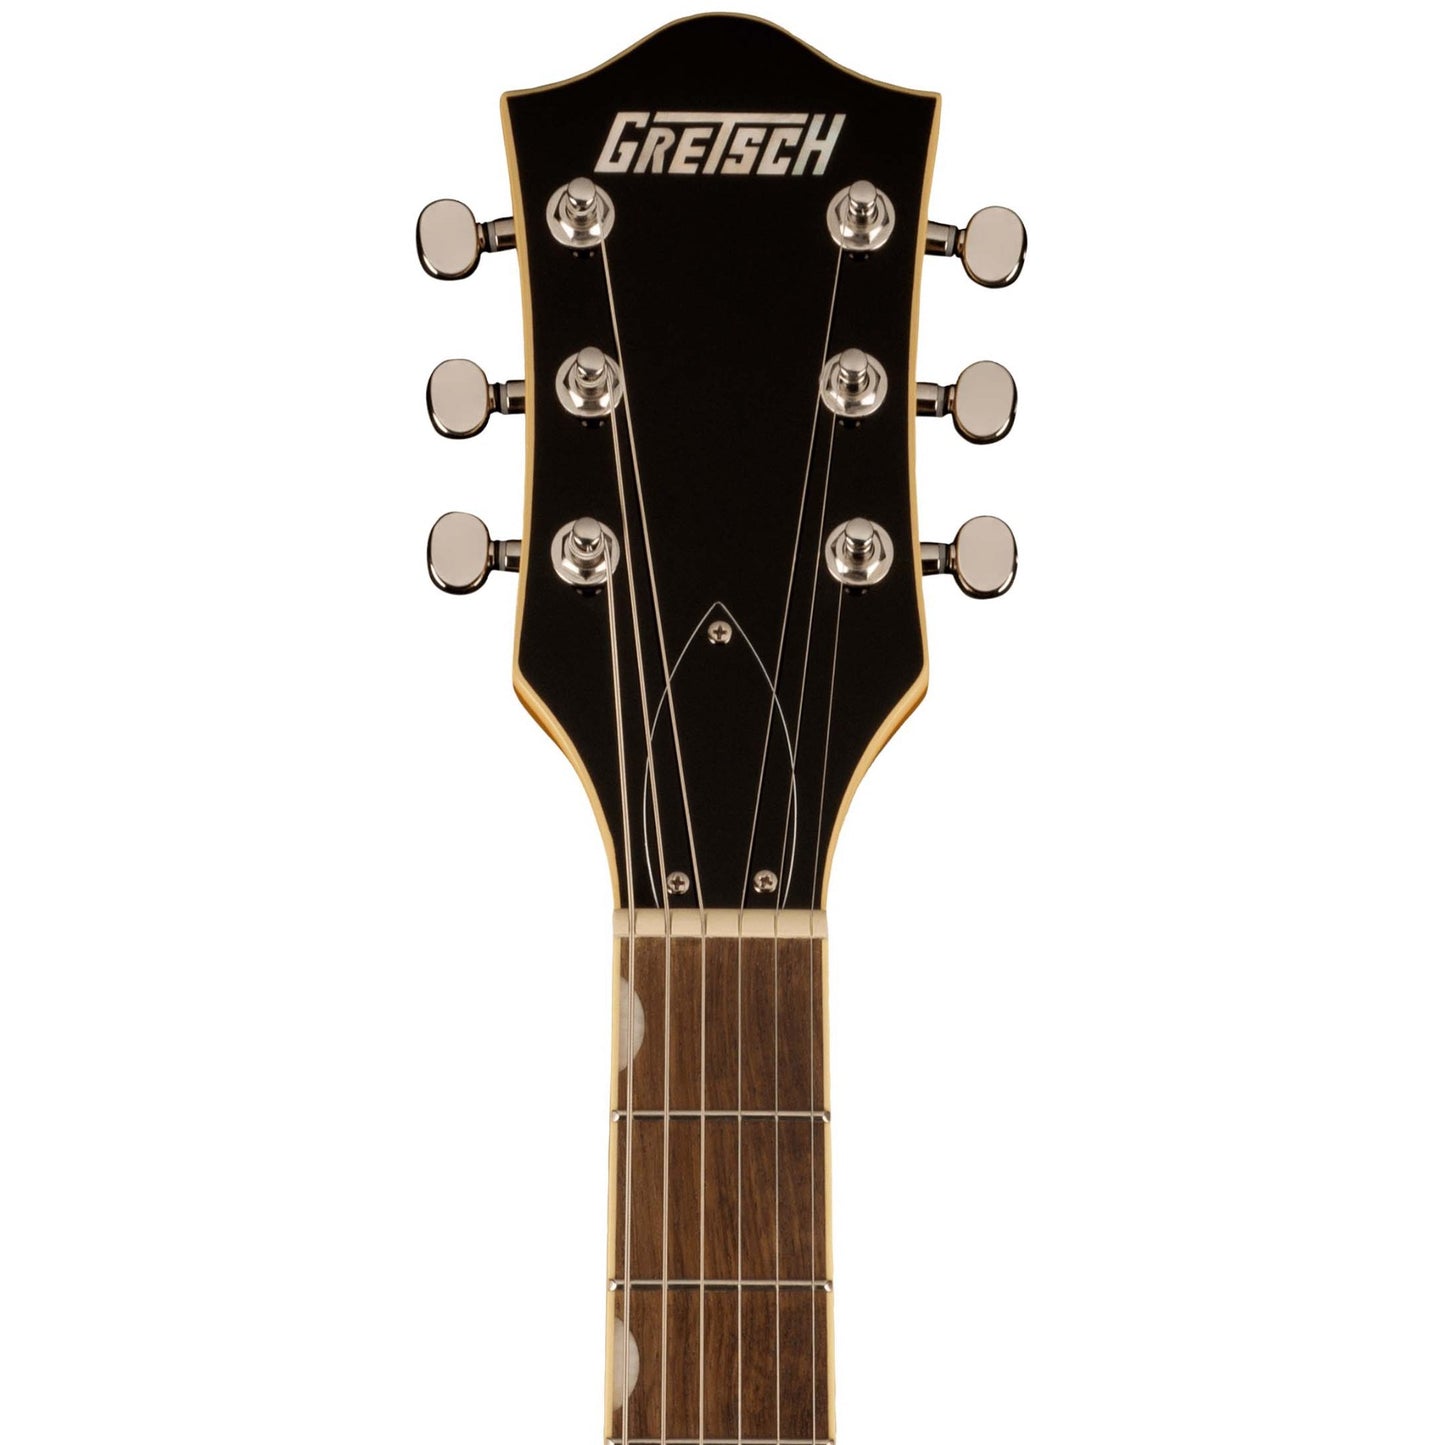 Gretsch G5655T-QM Electromatic Center Block Jr. Electric Guitar in Speyside